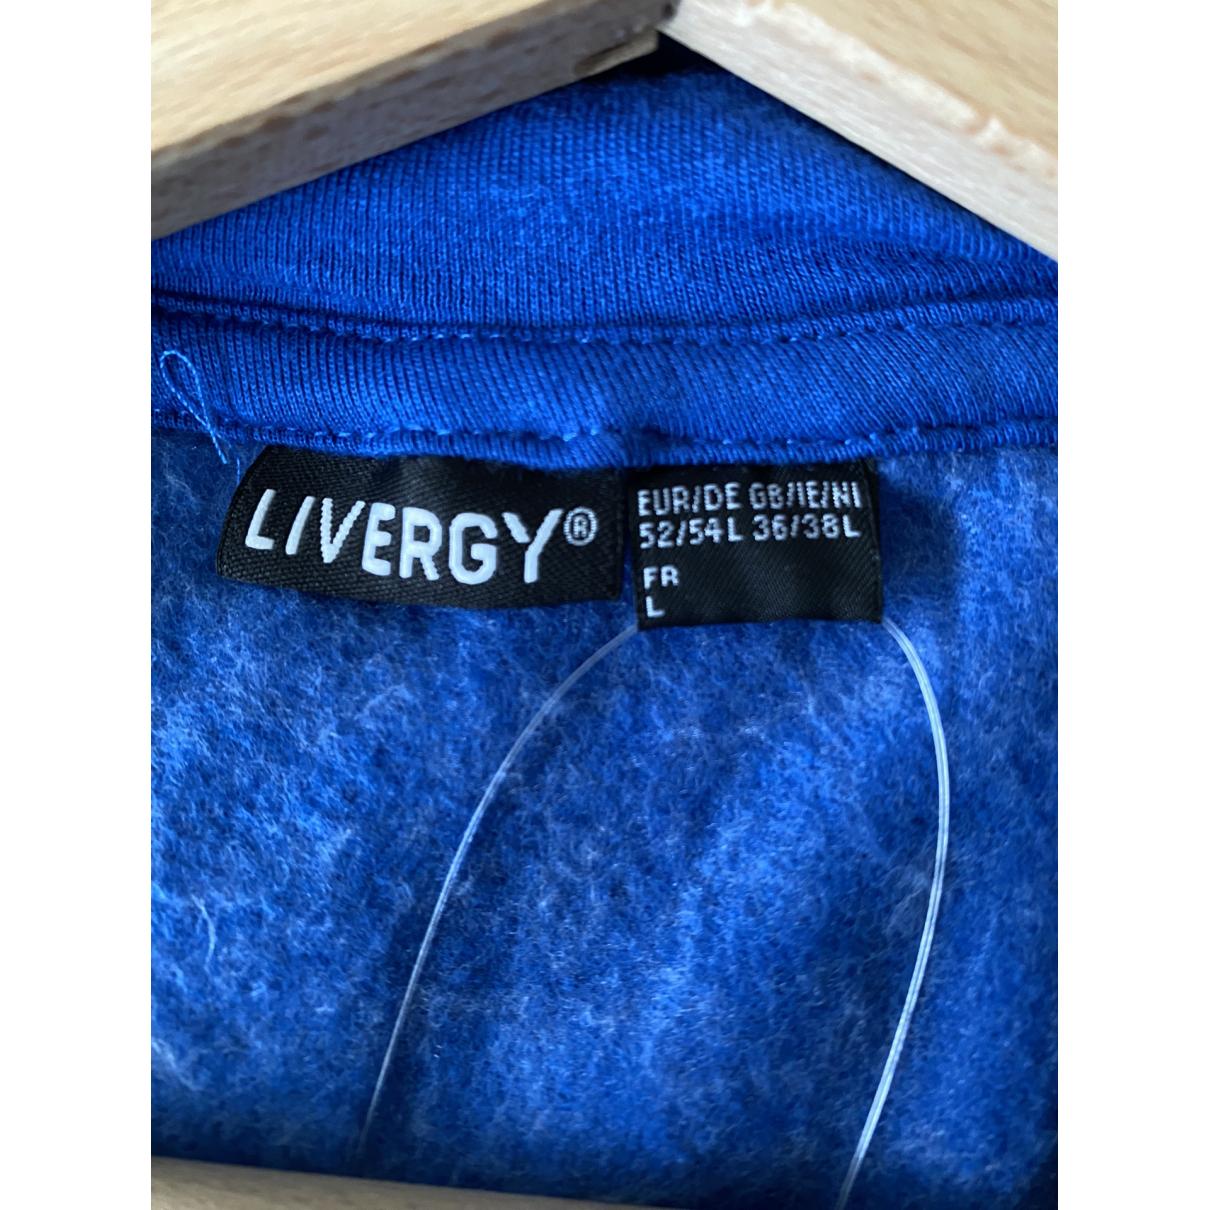 Sweatshirt in size - Cotton Lidl Blue 29383561 International L